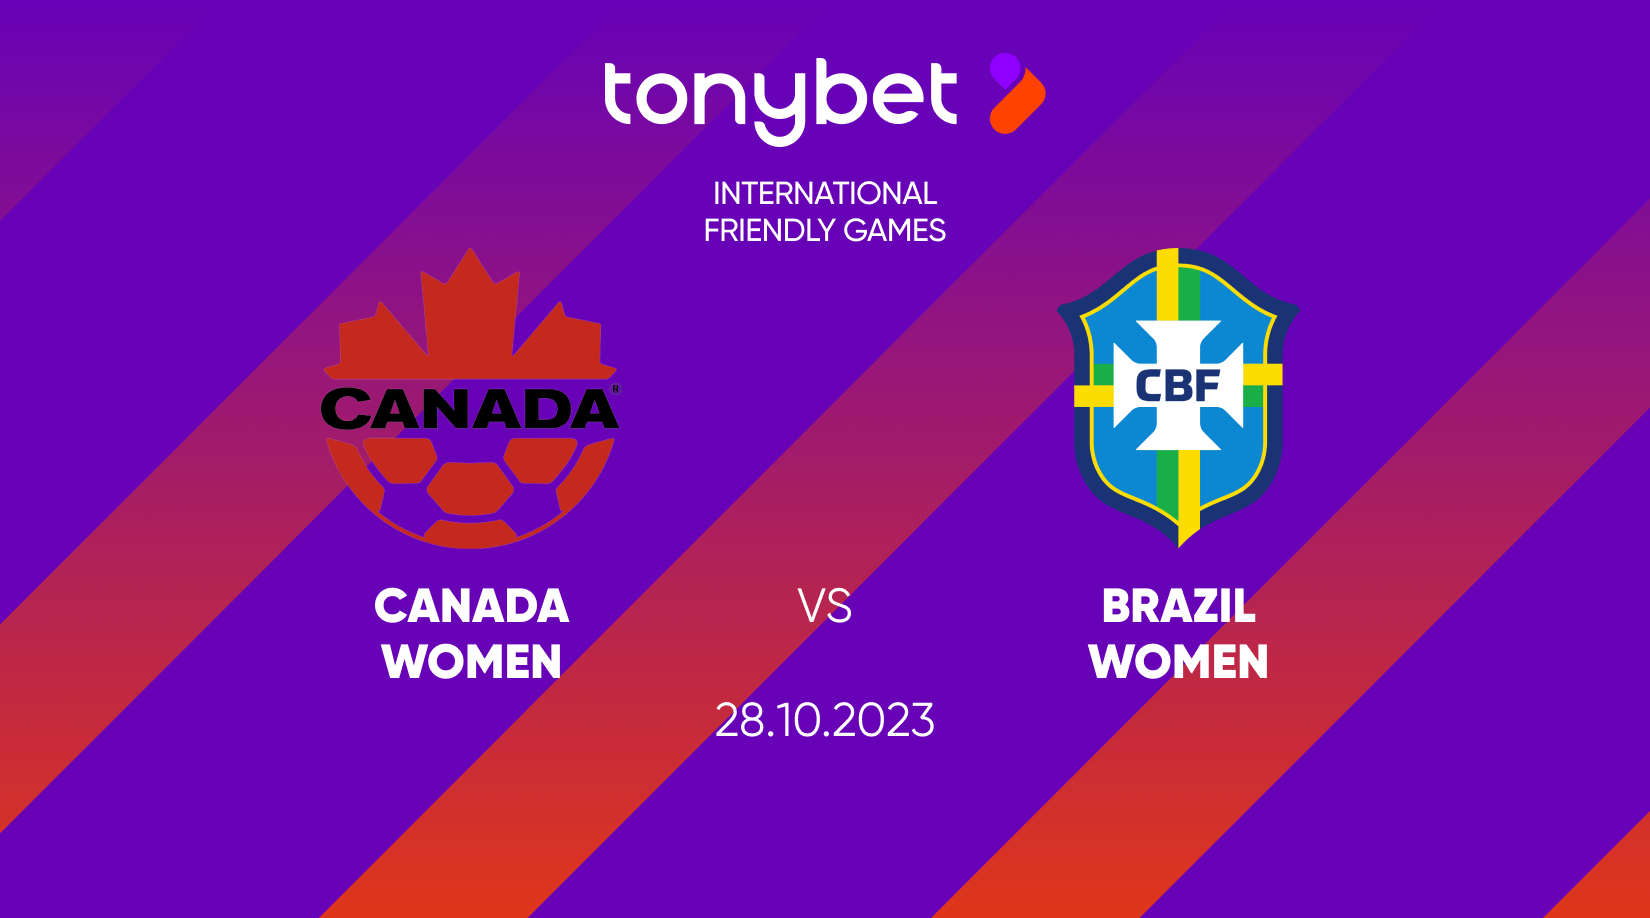 Canada Women vs Brazil Women: Match Predictions